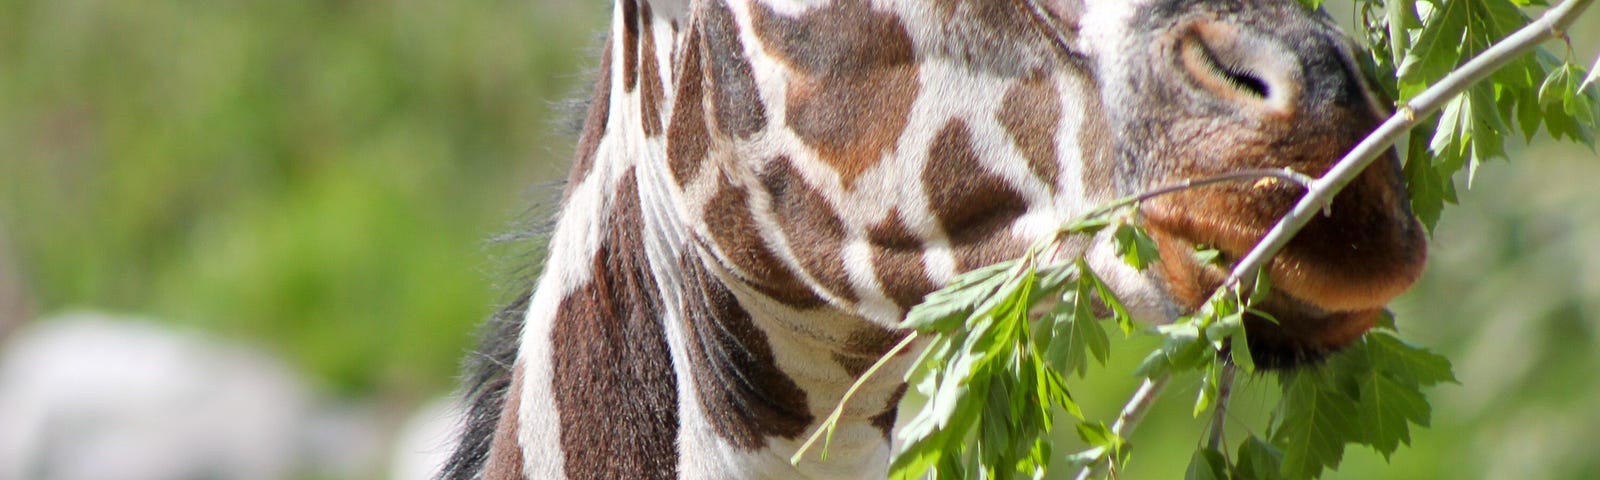 close-up of giraffe eating leaves